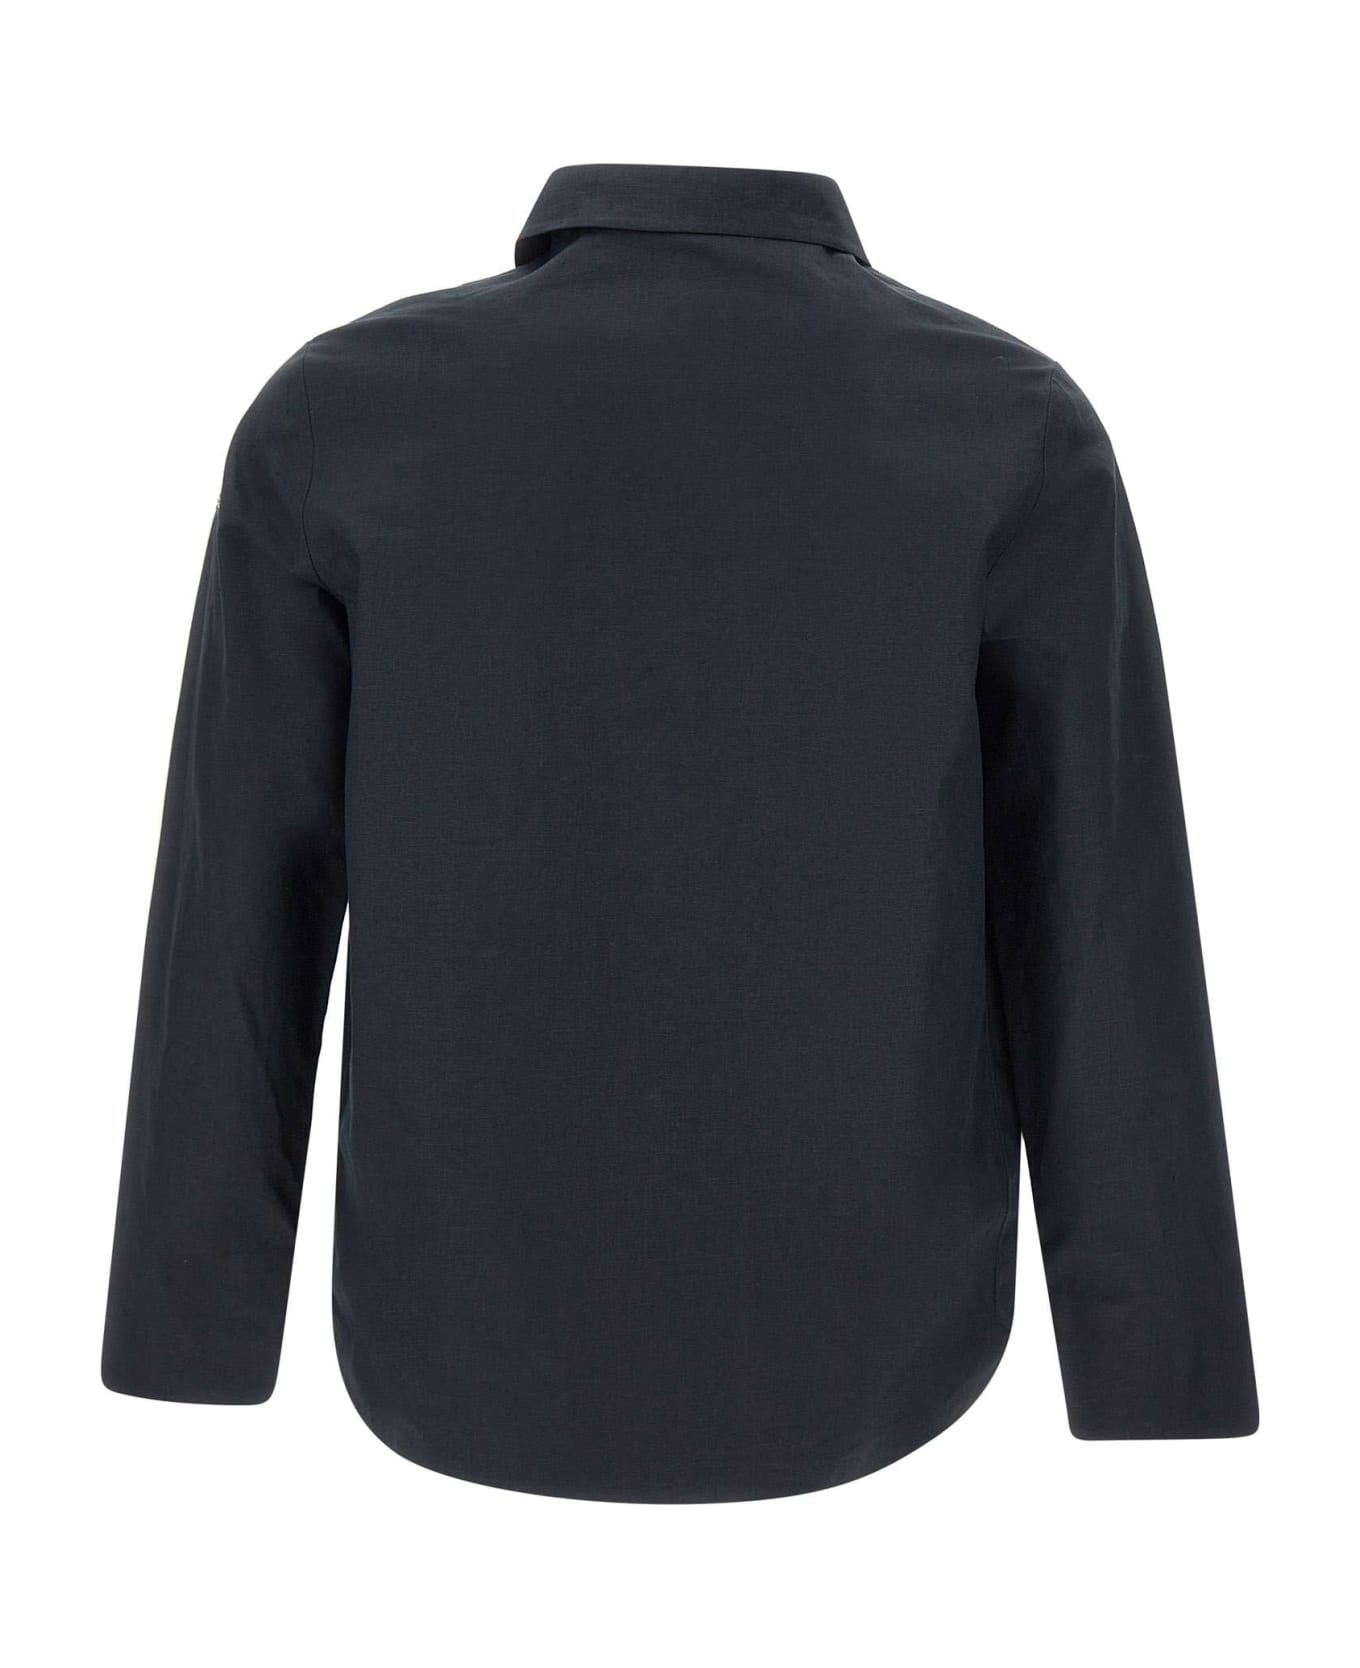 RRD - Roberto Ricci Design "terzilino Overshirt" Linen Jacket - BLUE